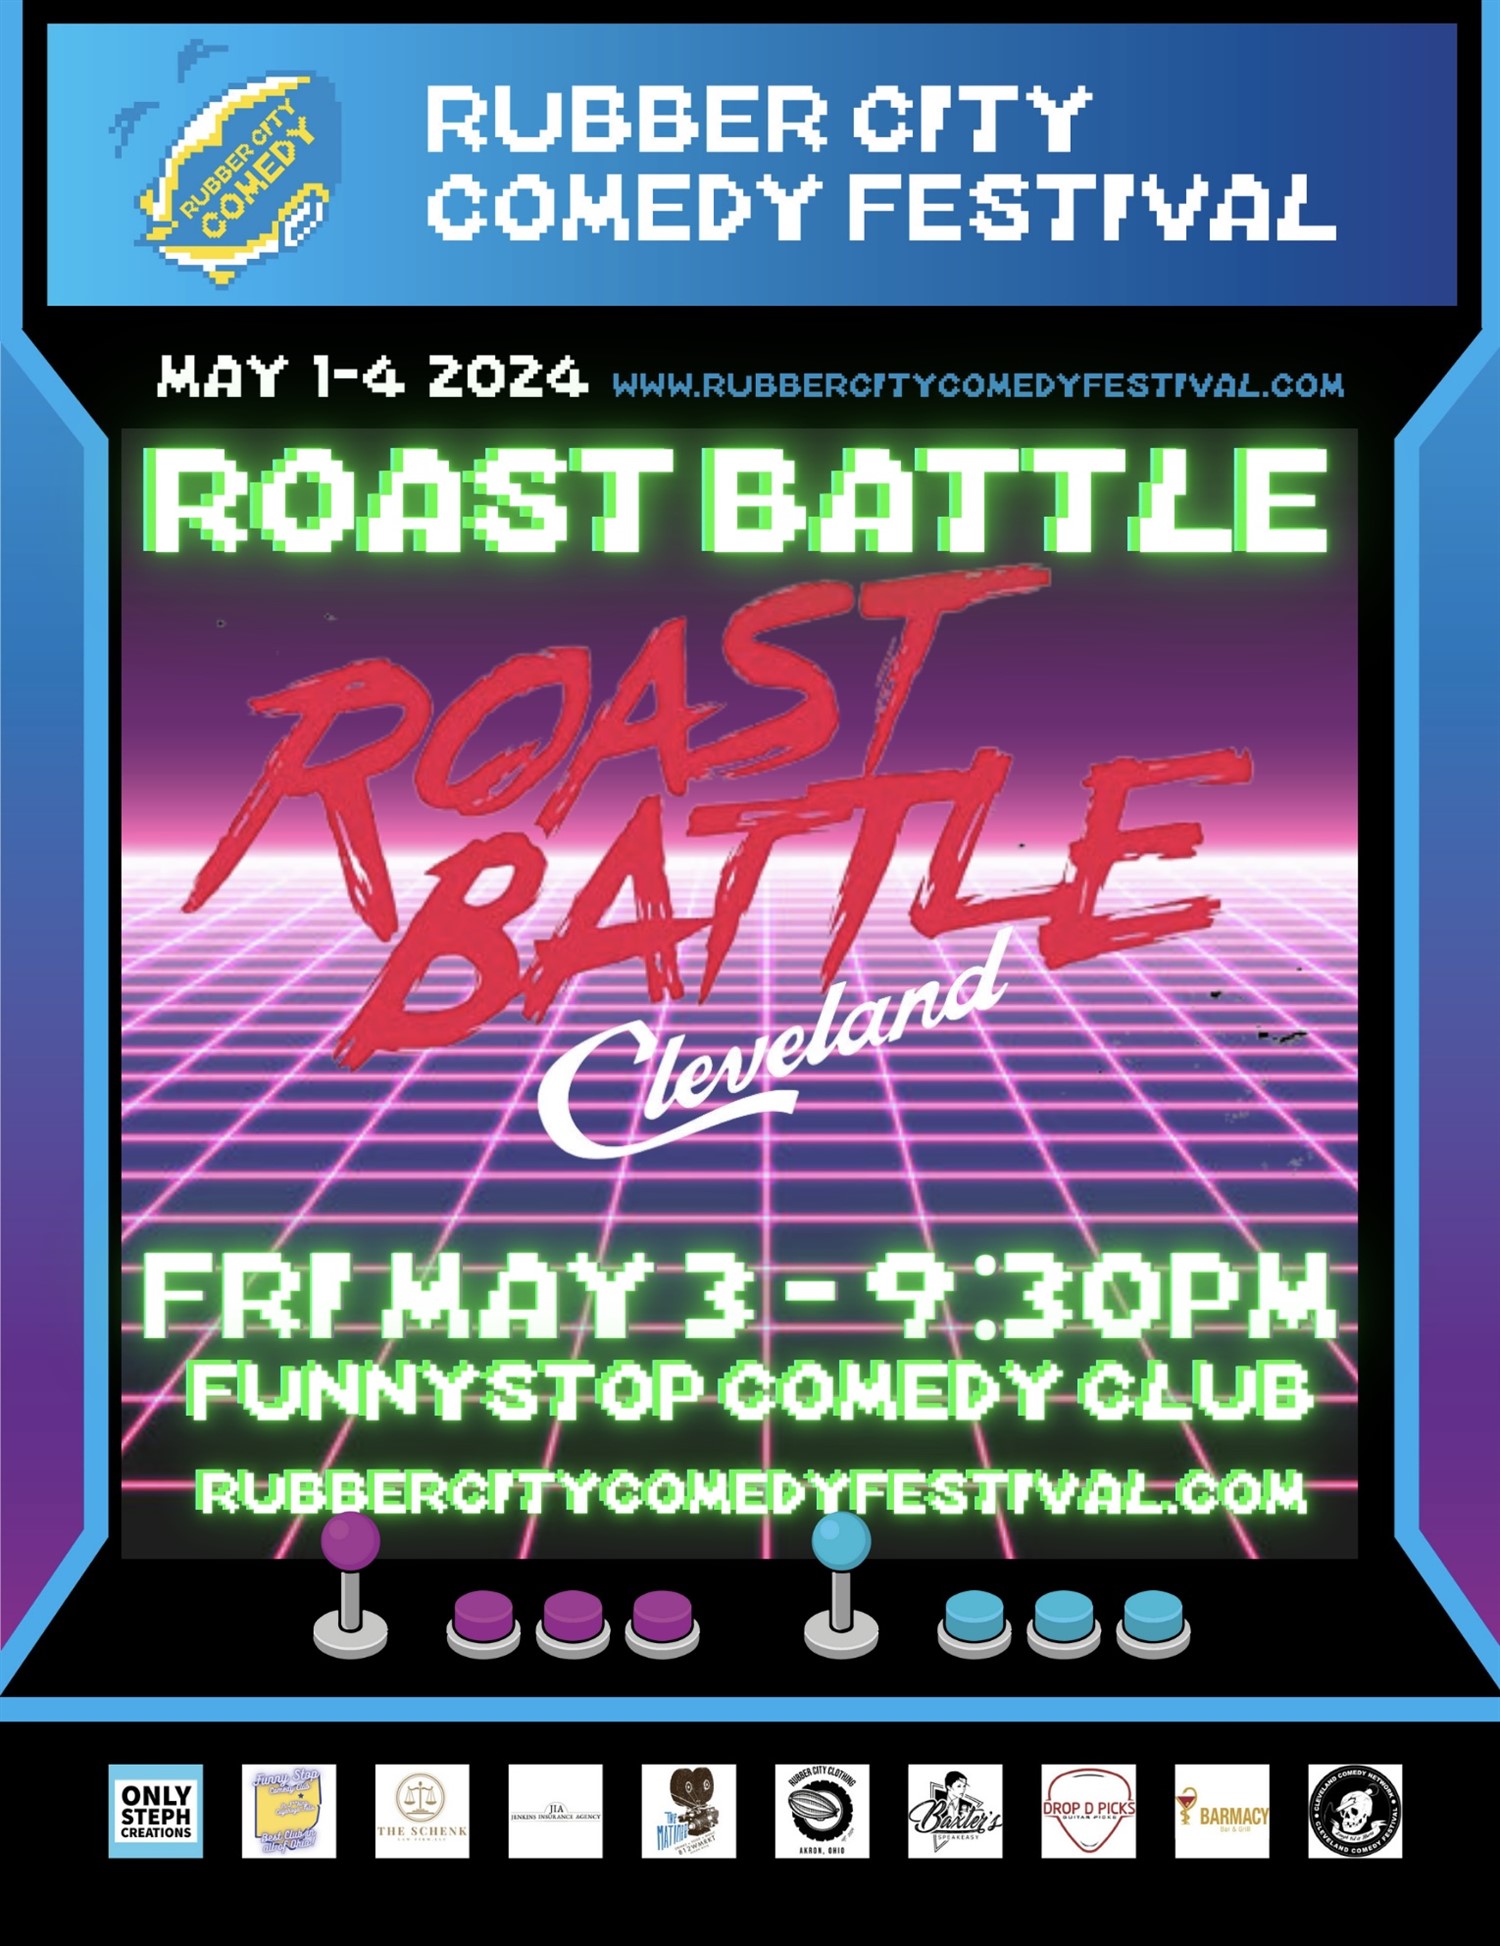 ROAST BATTLE CLEVELAND | 9:30 PM | Rubber City Comedy Festival Funny Stop Comedy Club on mai 03, 21:30@Funny Stop Comedy Club - Achetez des billets et obtenez des informations surFunny Stop funnystop.online